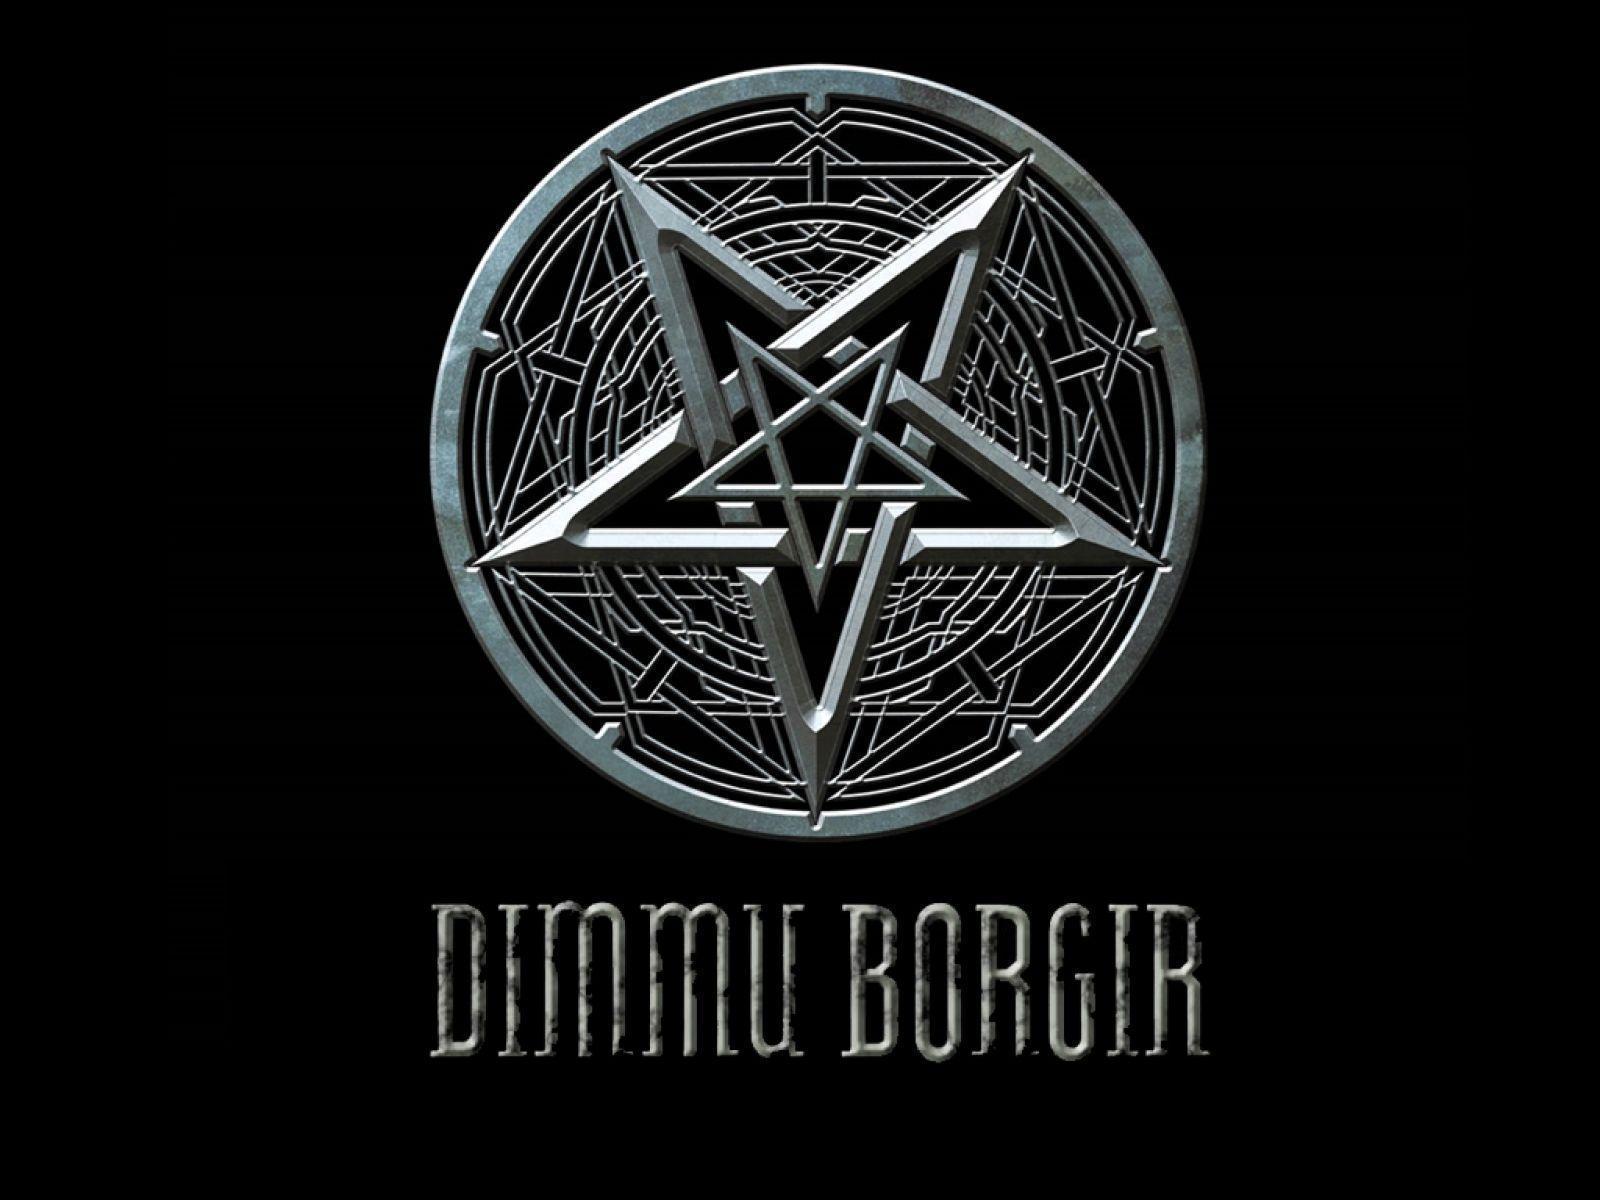 pentagram band logo